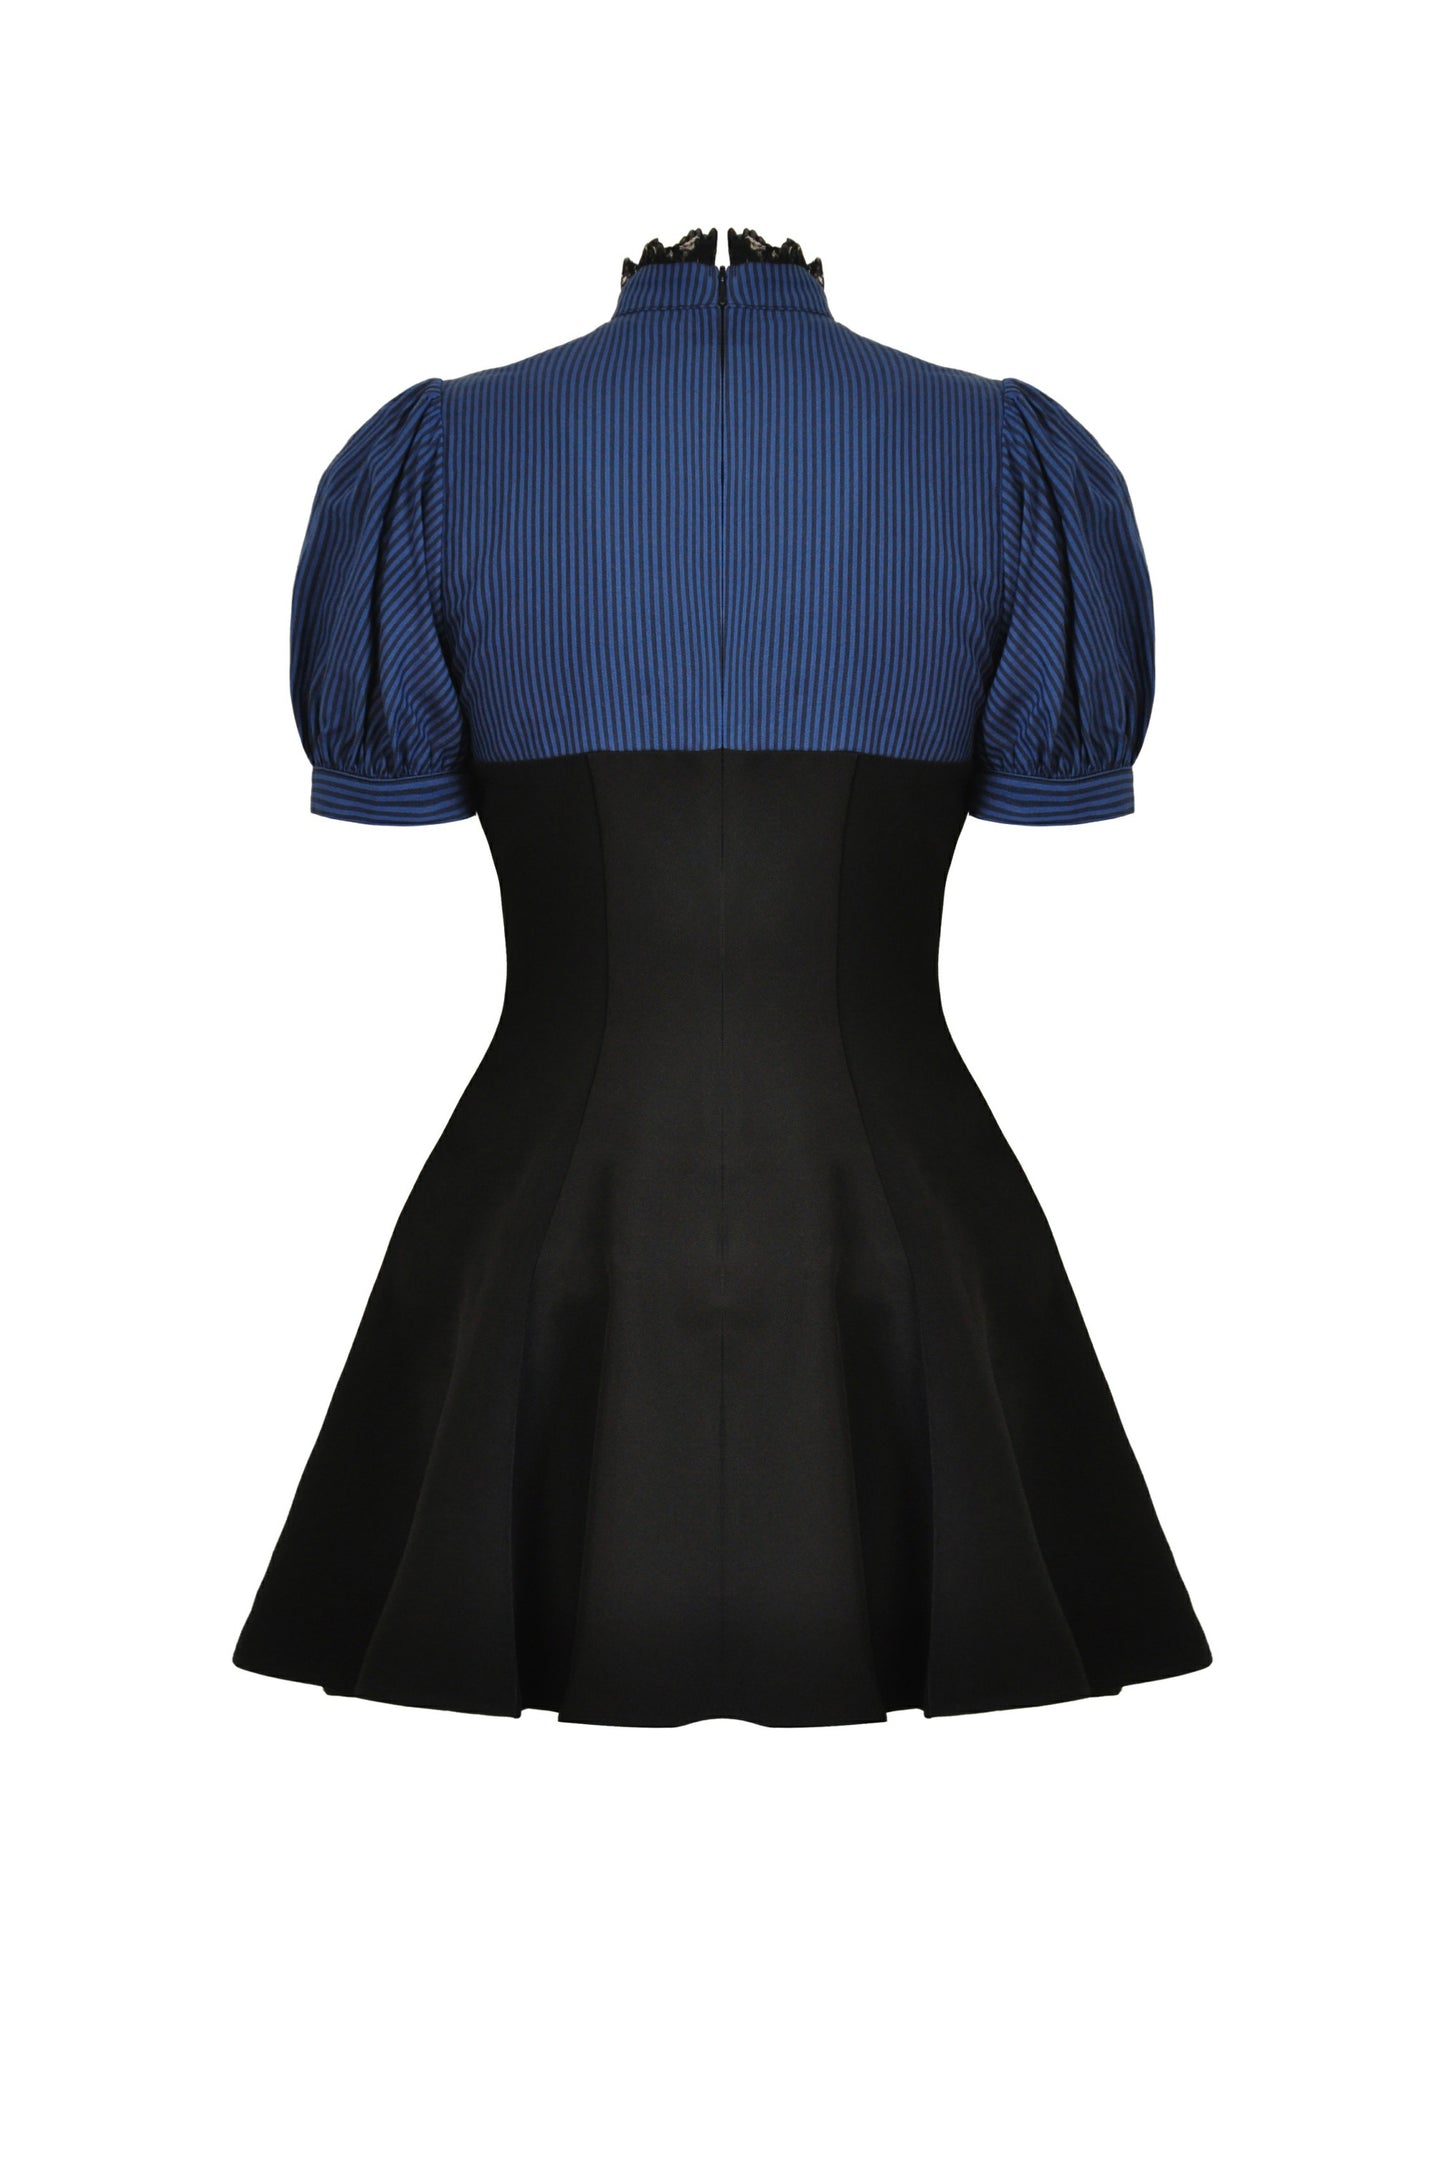 Megan Blue Stripe Frilly Collar Dress by Dark In Love